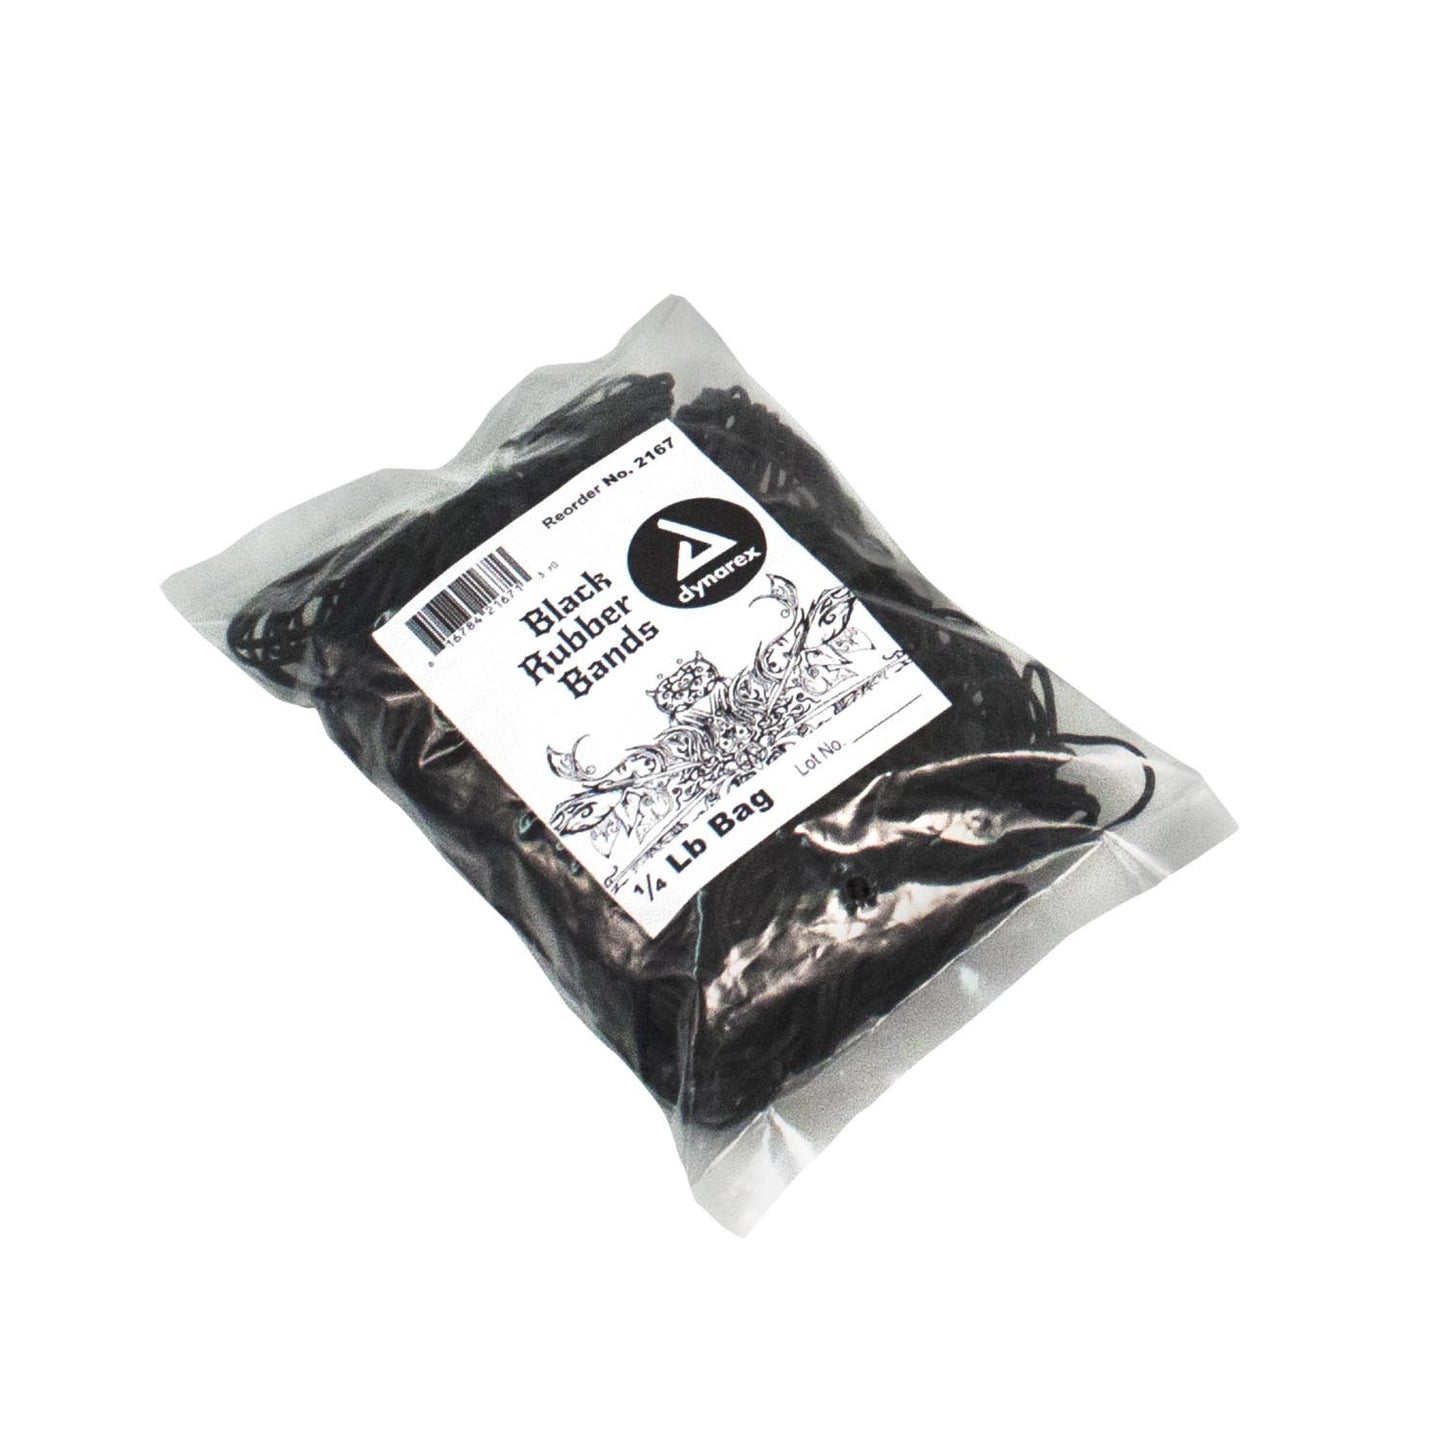 Black Rubber Bands 0.25 lb. bag